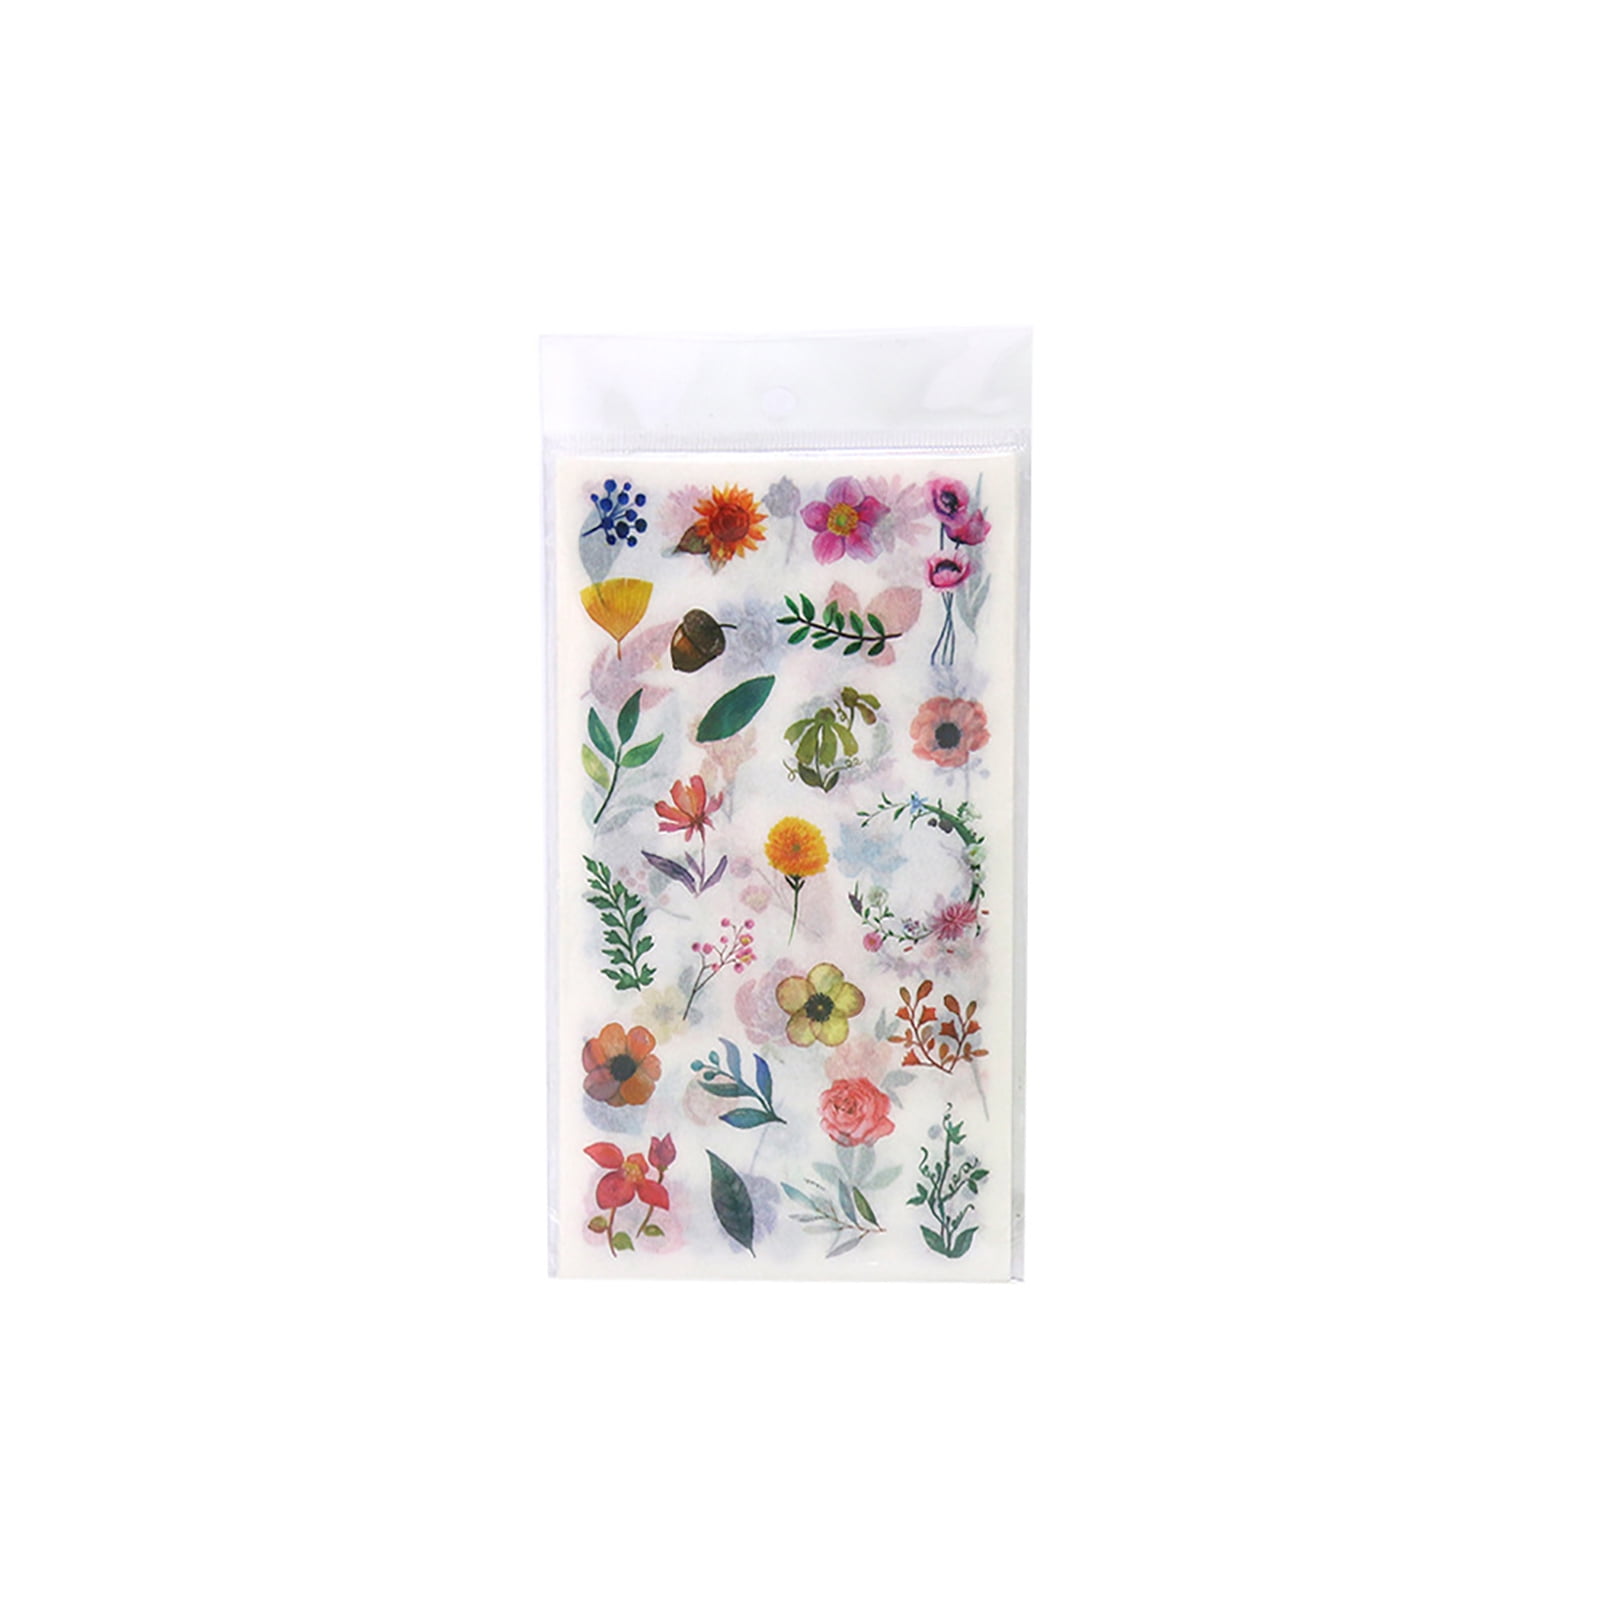 60 PCS Floral Bird Plant Washi Planner Sticker Craft Scrapbooking Sticker Set for Diary Notebook Journal Album Decorative Adhesive Sticker 